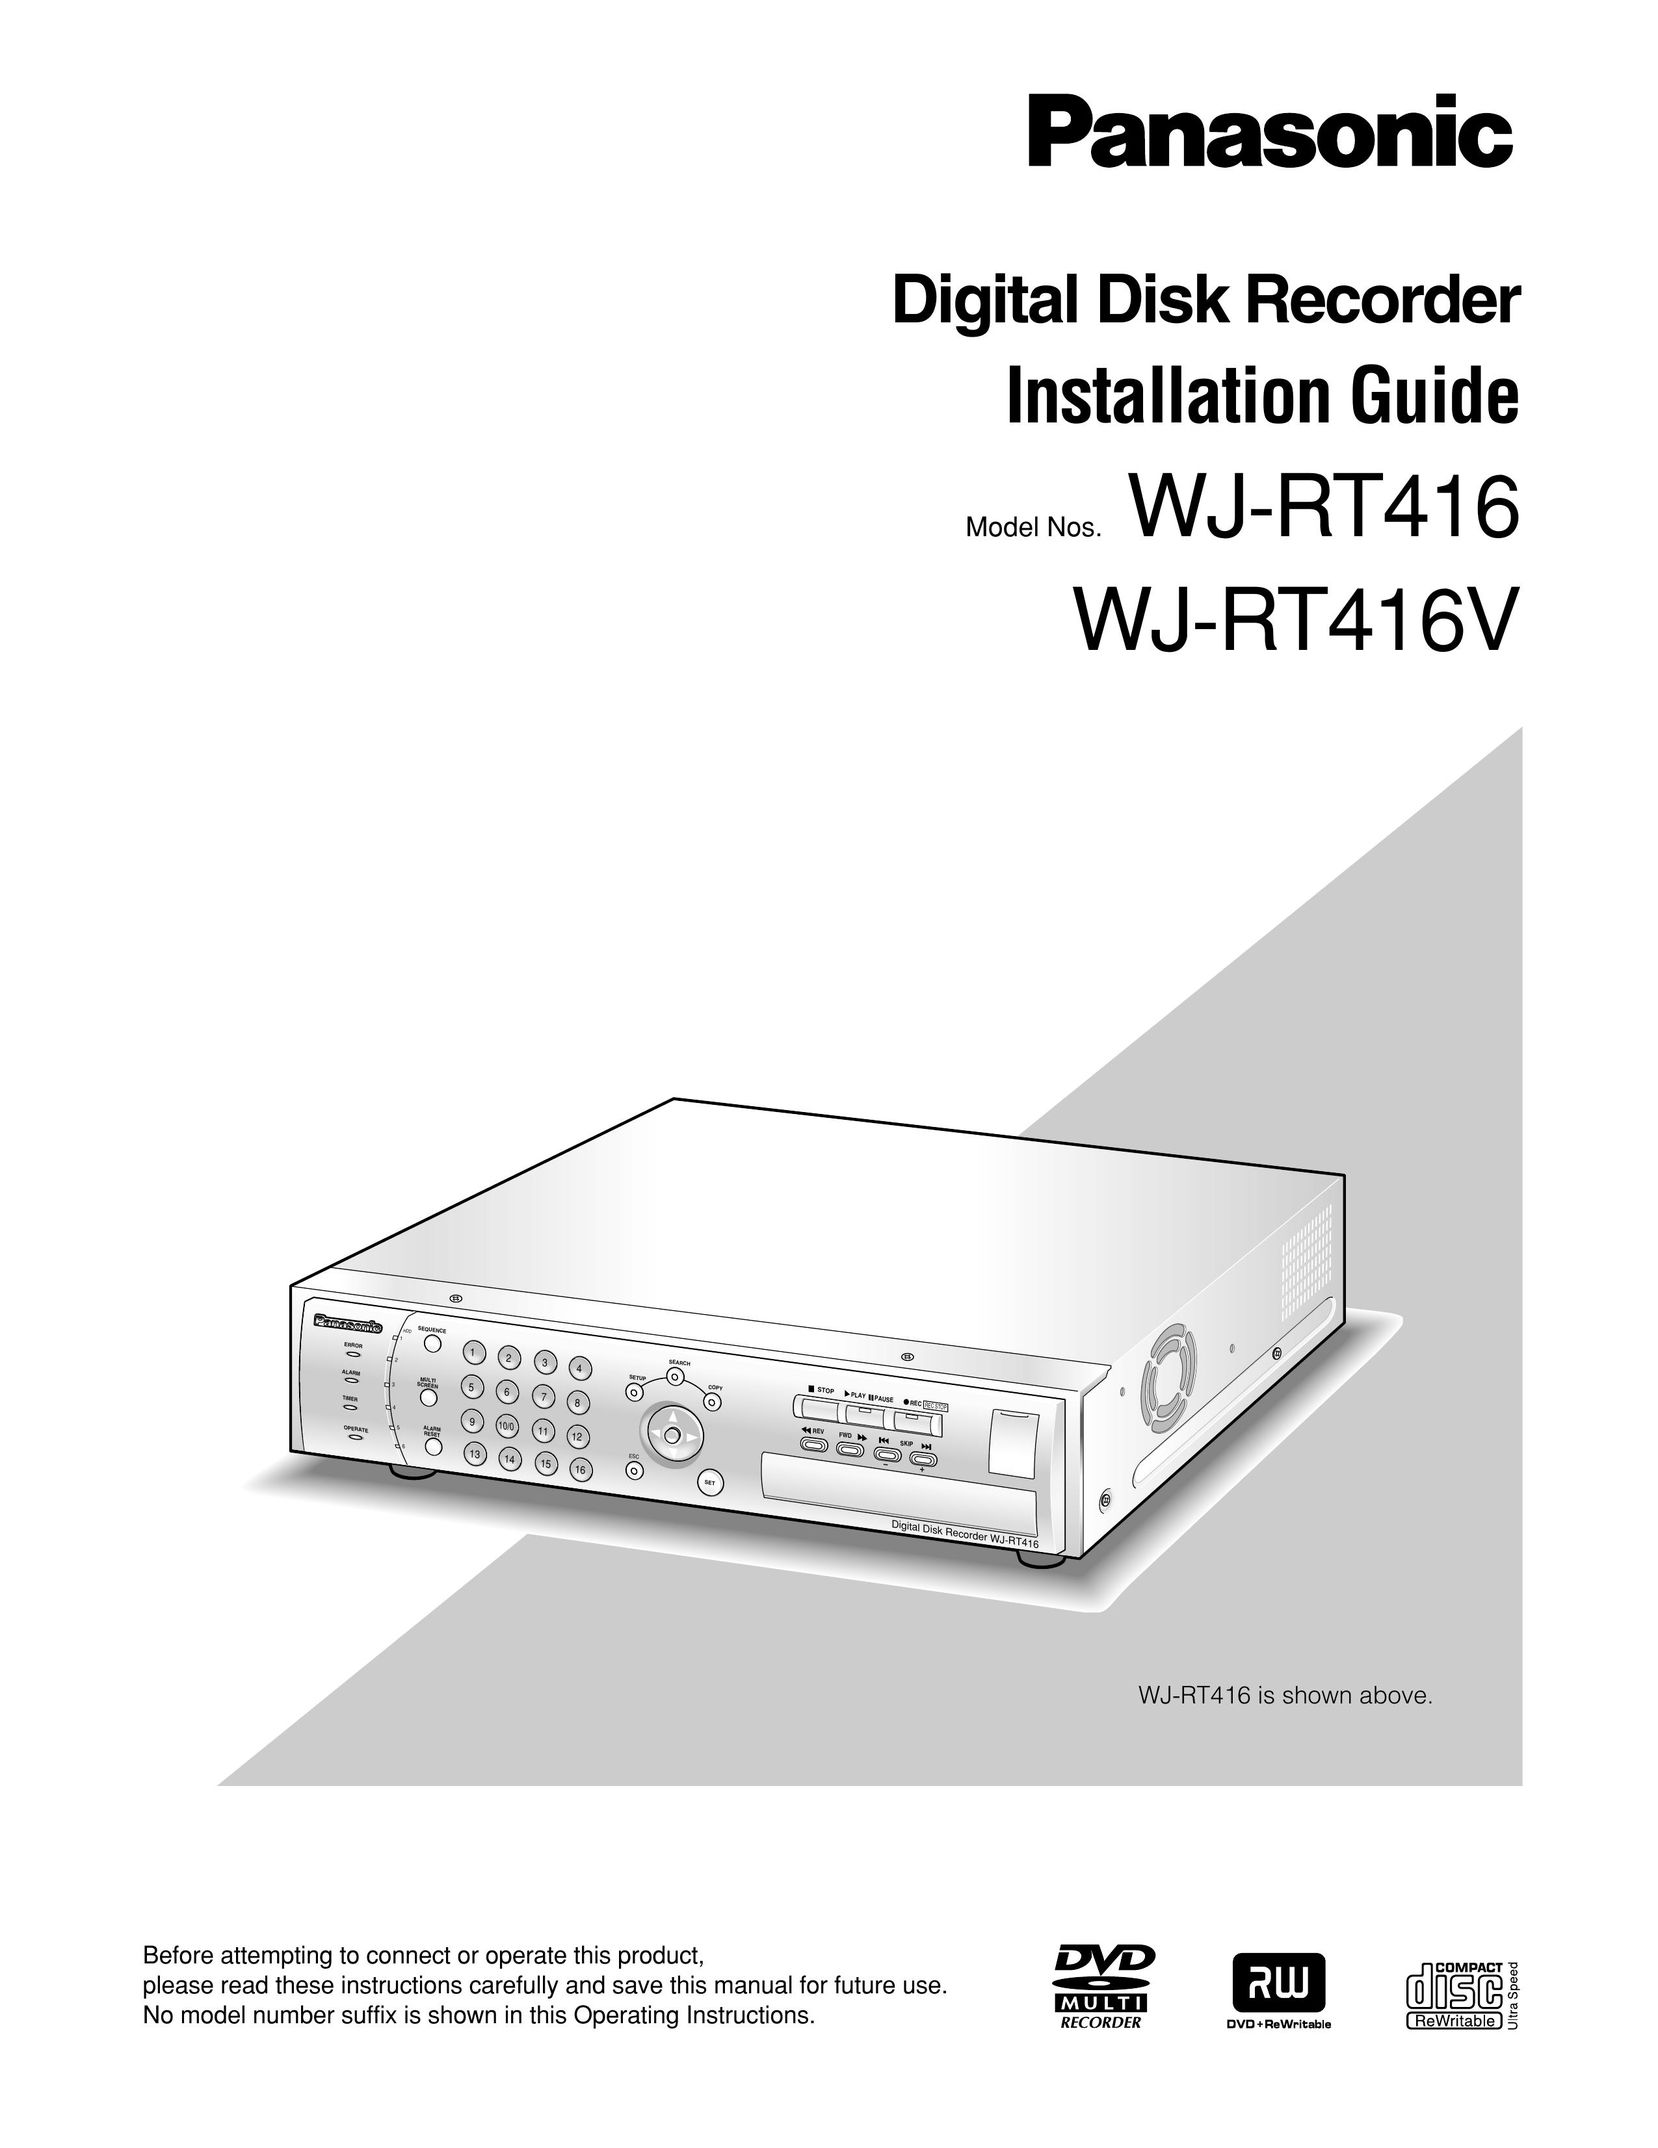 Panasonic WJ-RT416 DVR User Manual